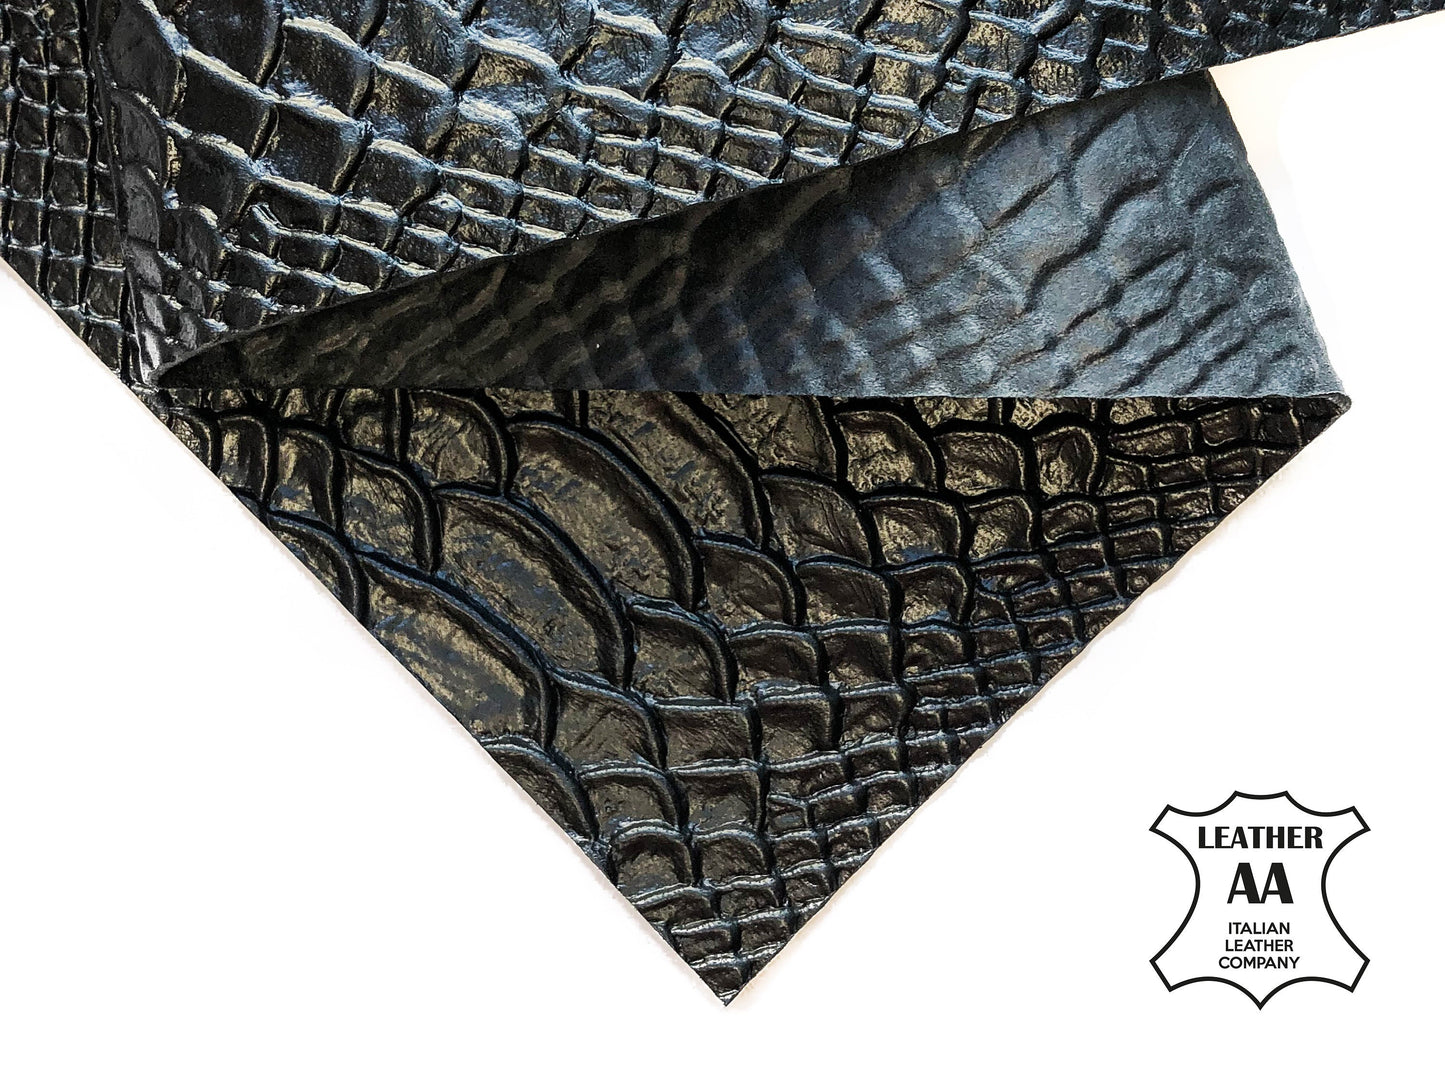 Black Leather  Sheets With Print 0.7mm/1.75oz / BLACK SNAKE 598